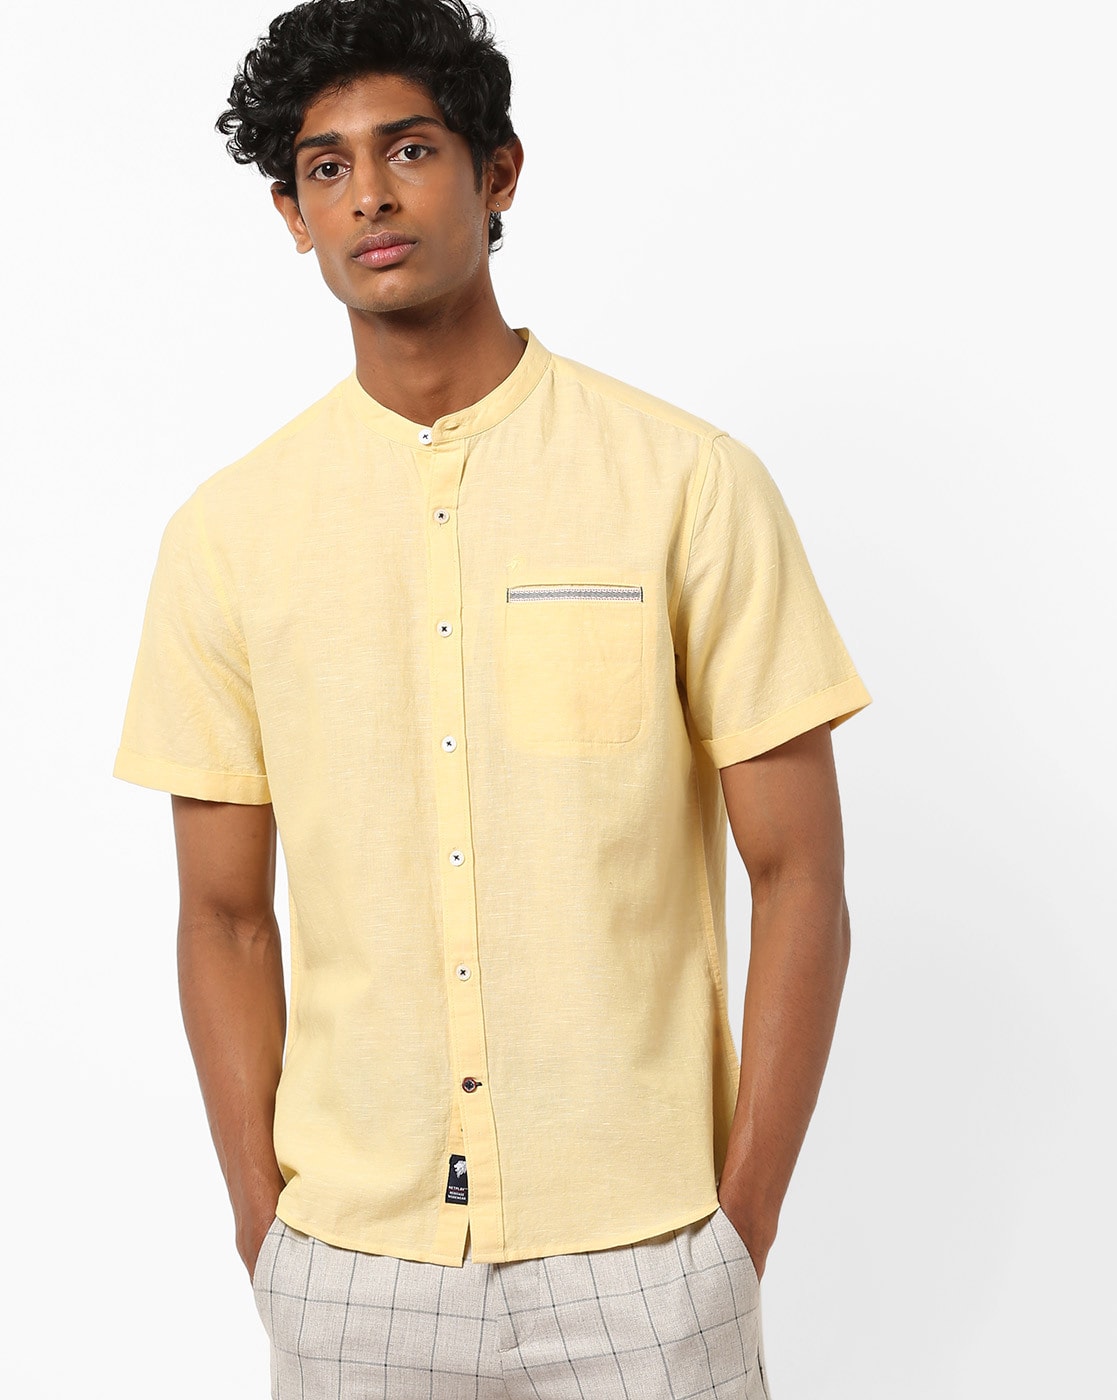 lemon yellow shirt| Enjoy free shipping | www.araldicavini.it